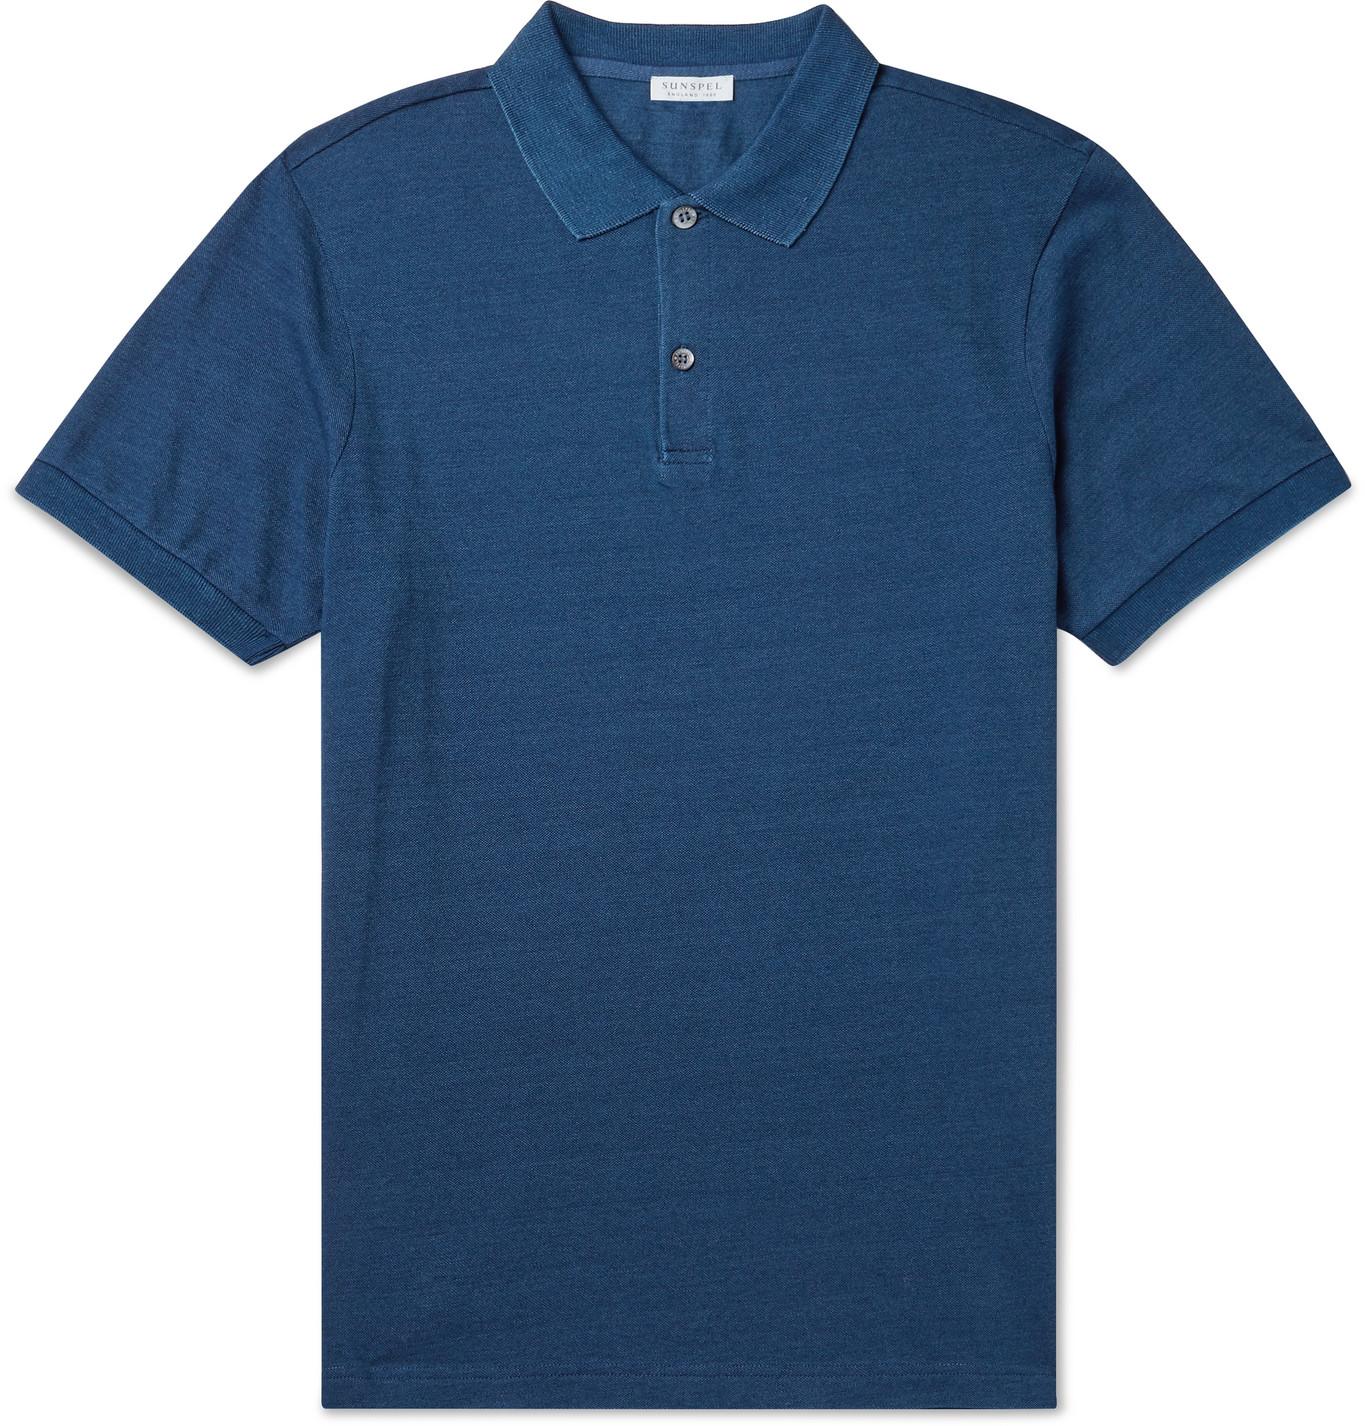 Sunspel Pima Cotton-piqué Polo Shirt in Blue for Men - Lyst